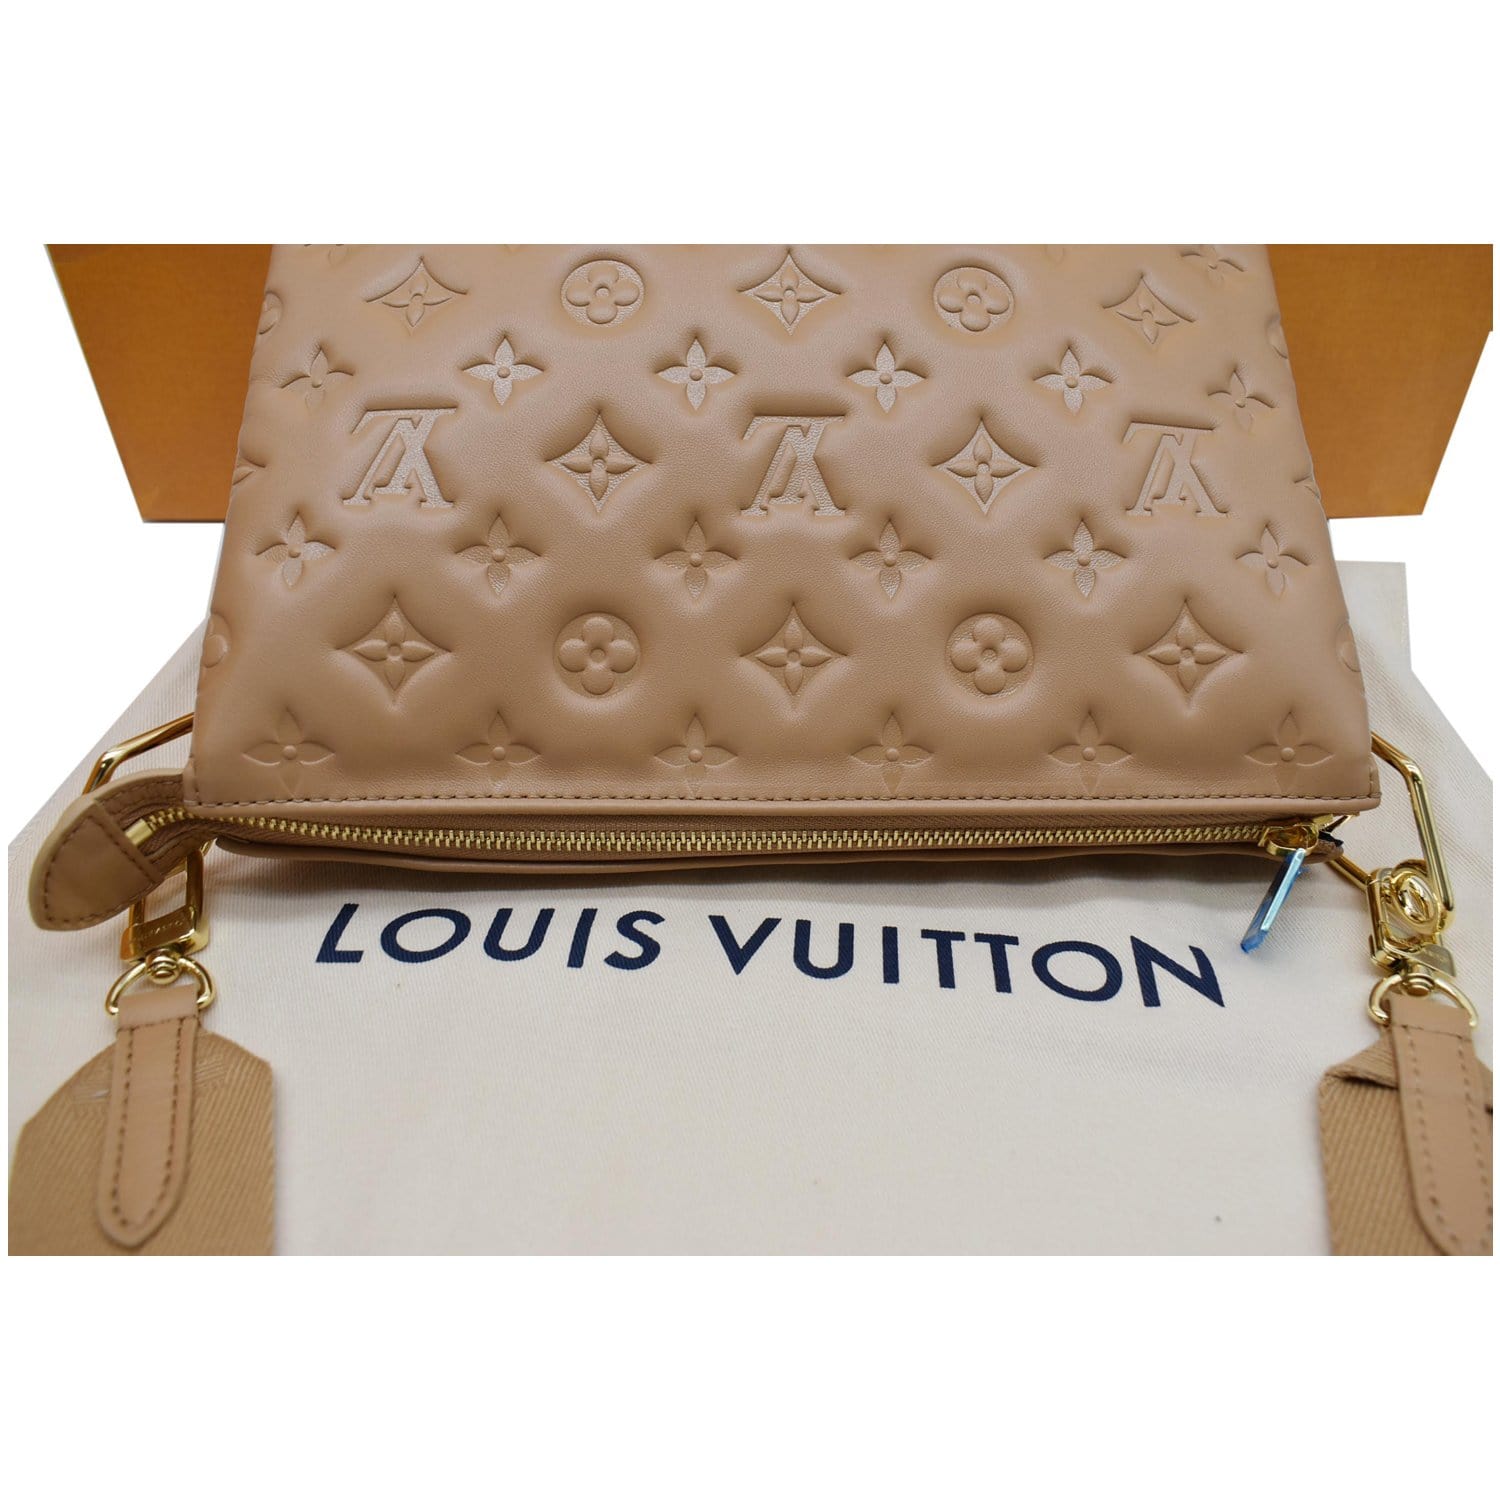 Louis Vuitton wallet - Twenty Nine